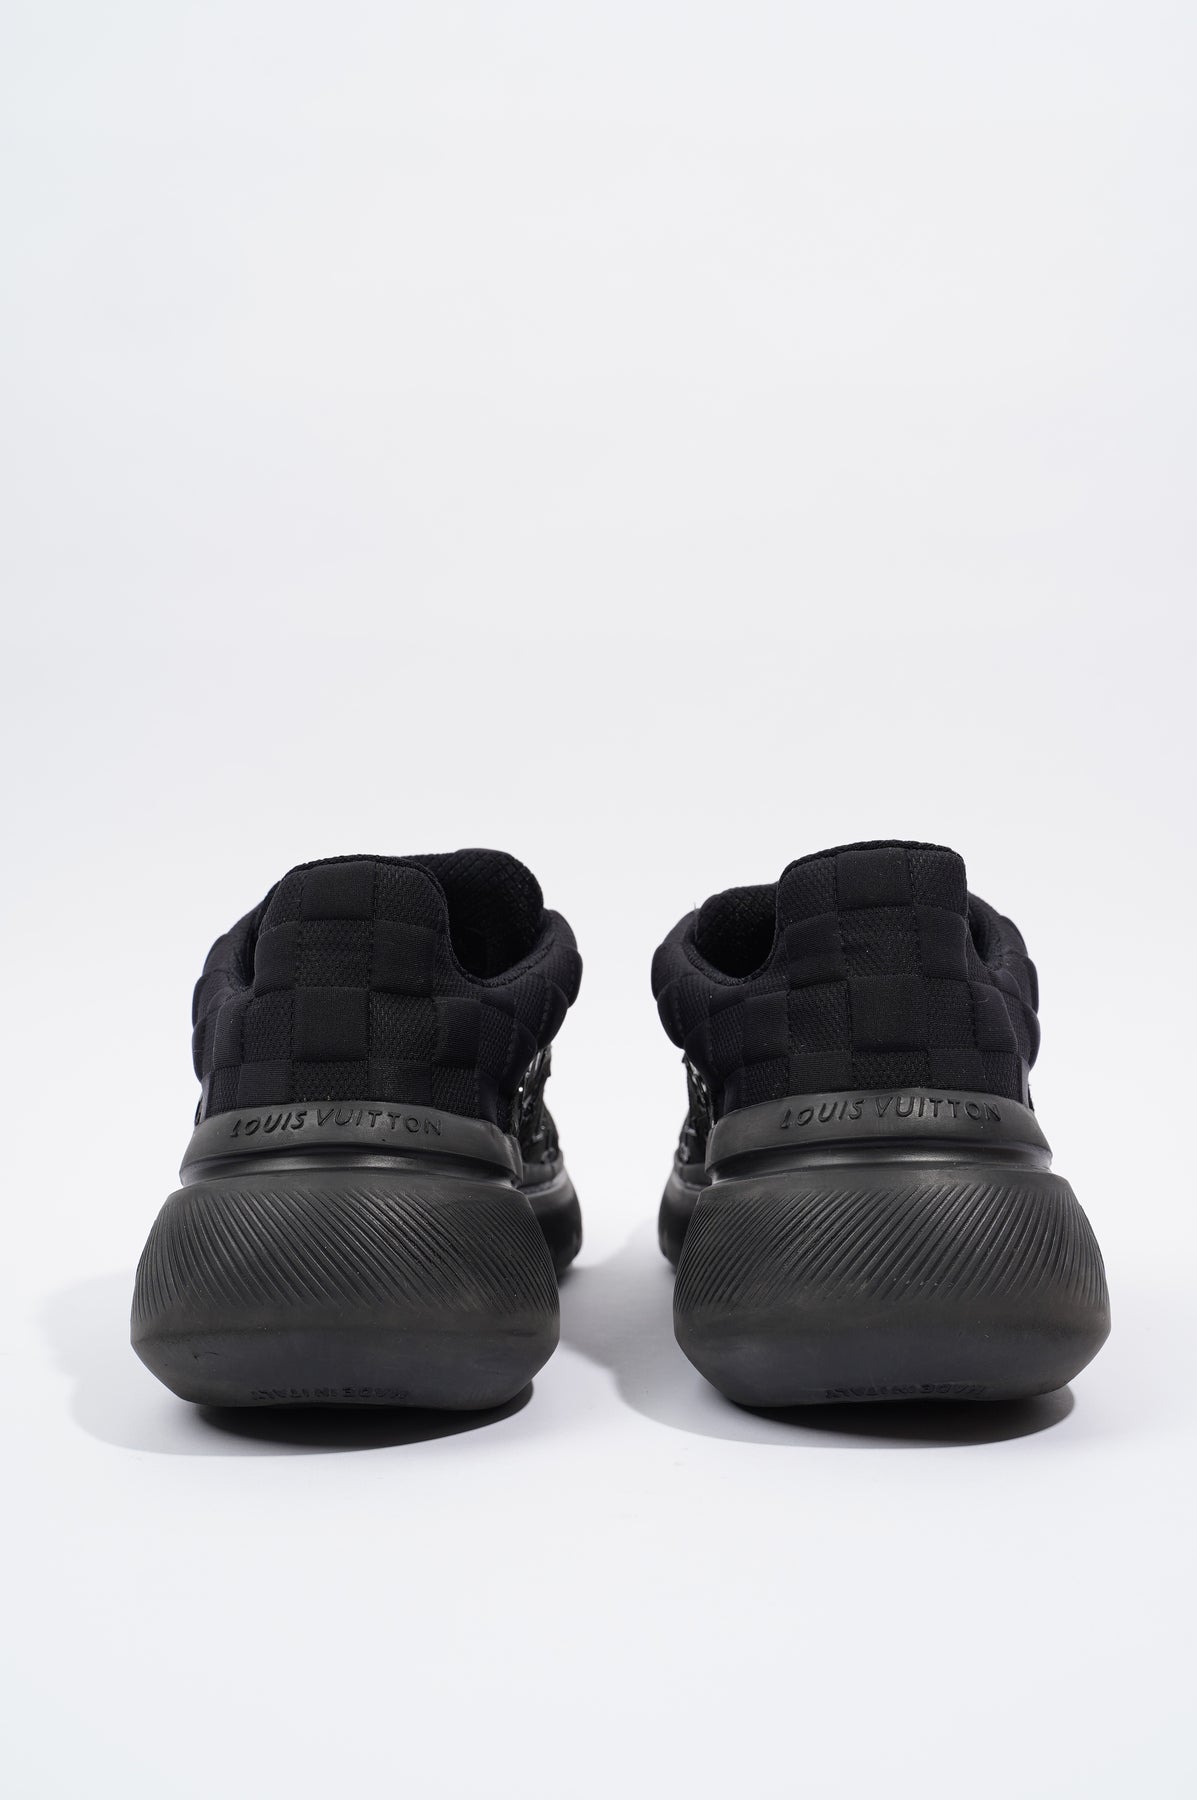 Louis Vuitton Mens Show Up Sneaker Black EU 40.5 / UK 6.5 Cloth